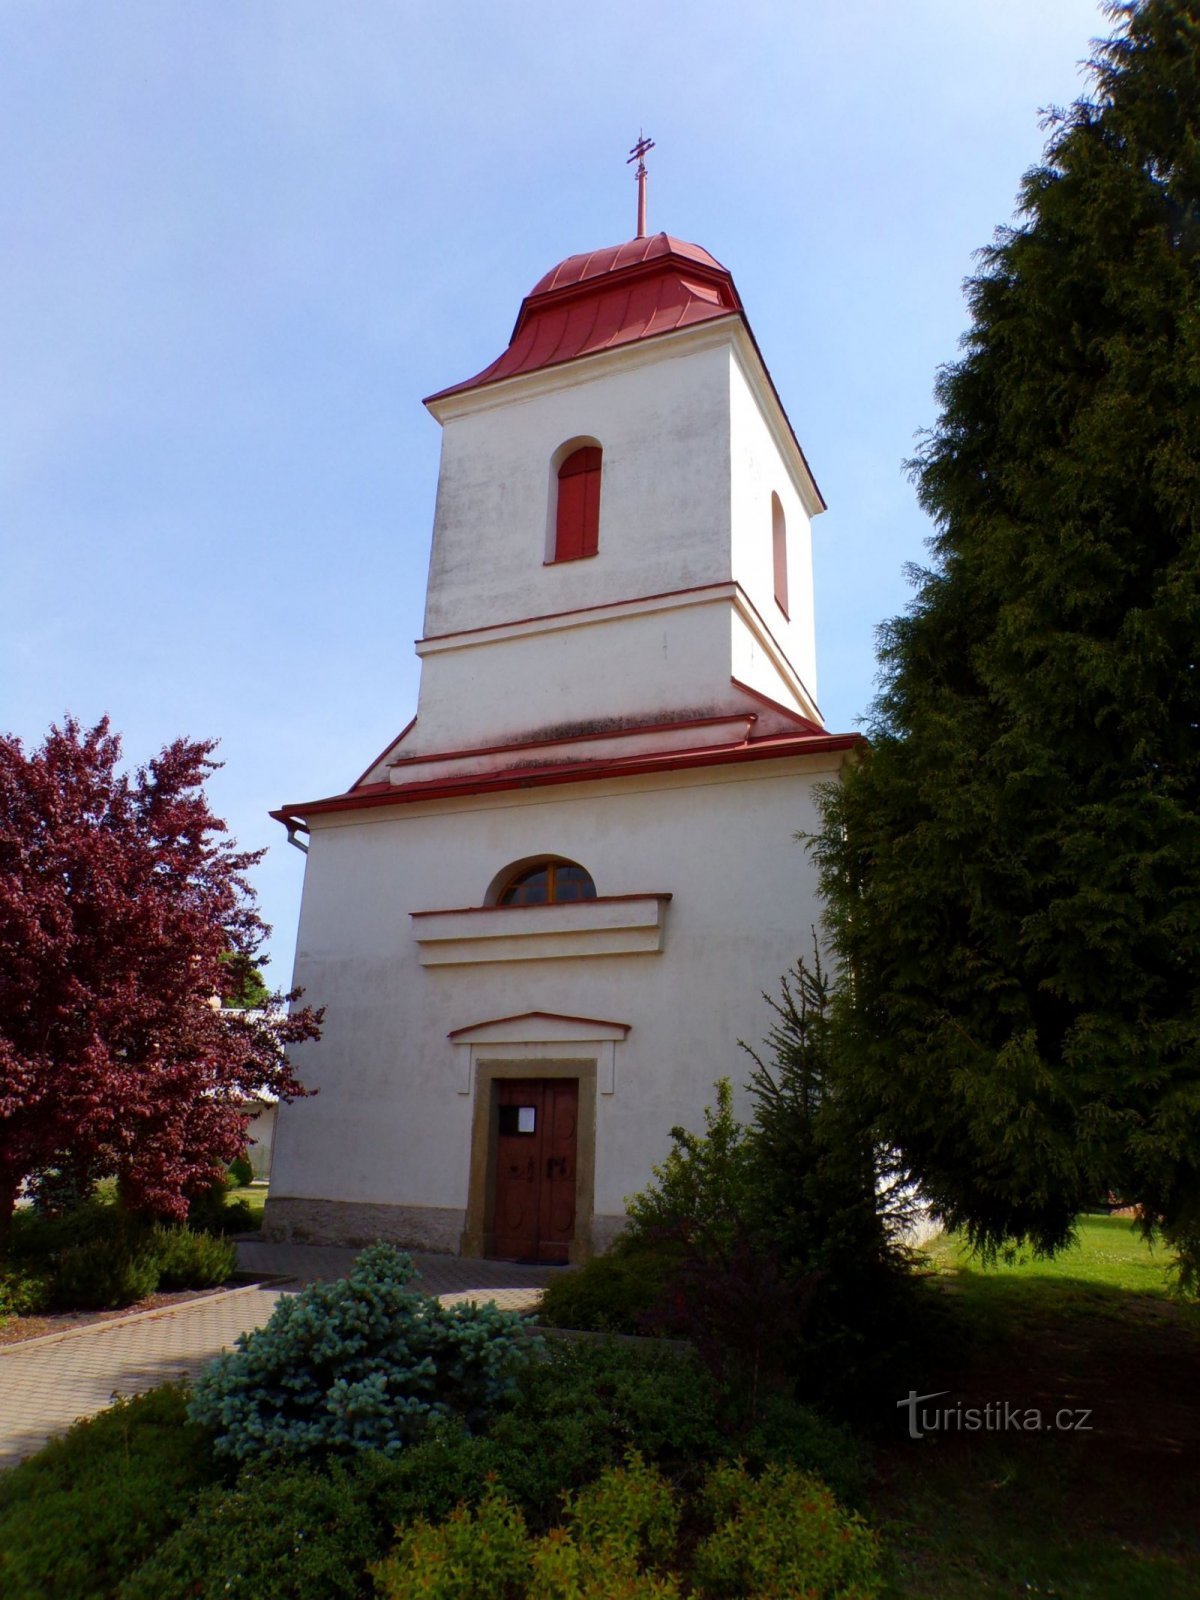 Cerkev sv. Janeza Krstnika (Albrechtice nad Orlicí, 20.5.2022. XNUMX. XNUMX)